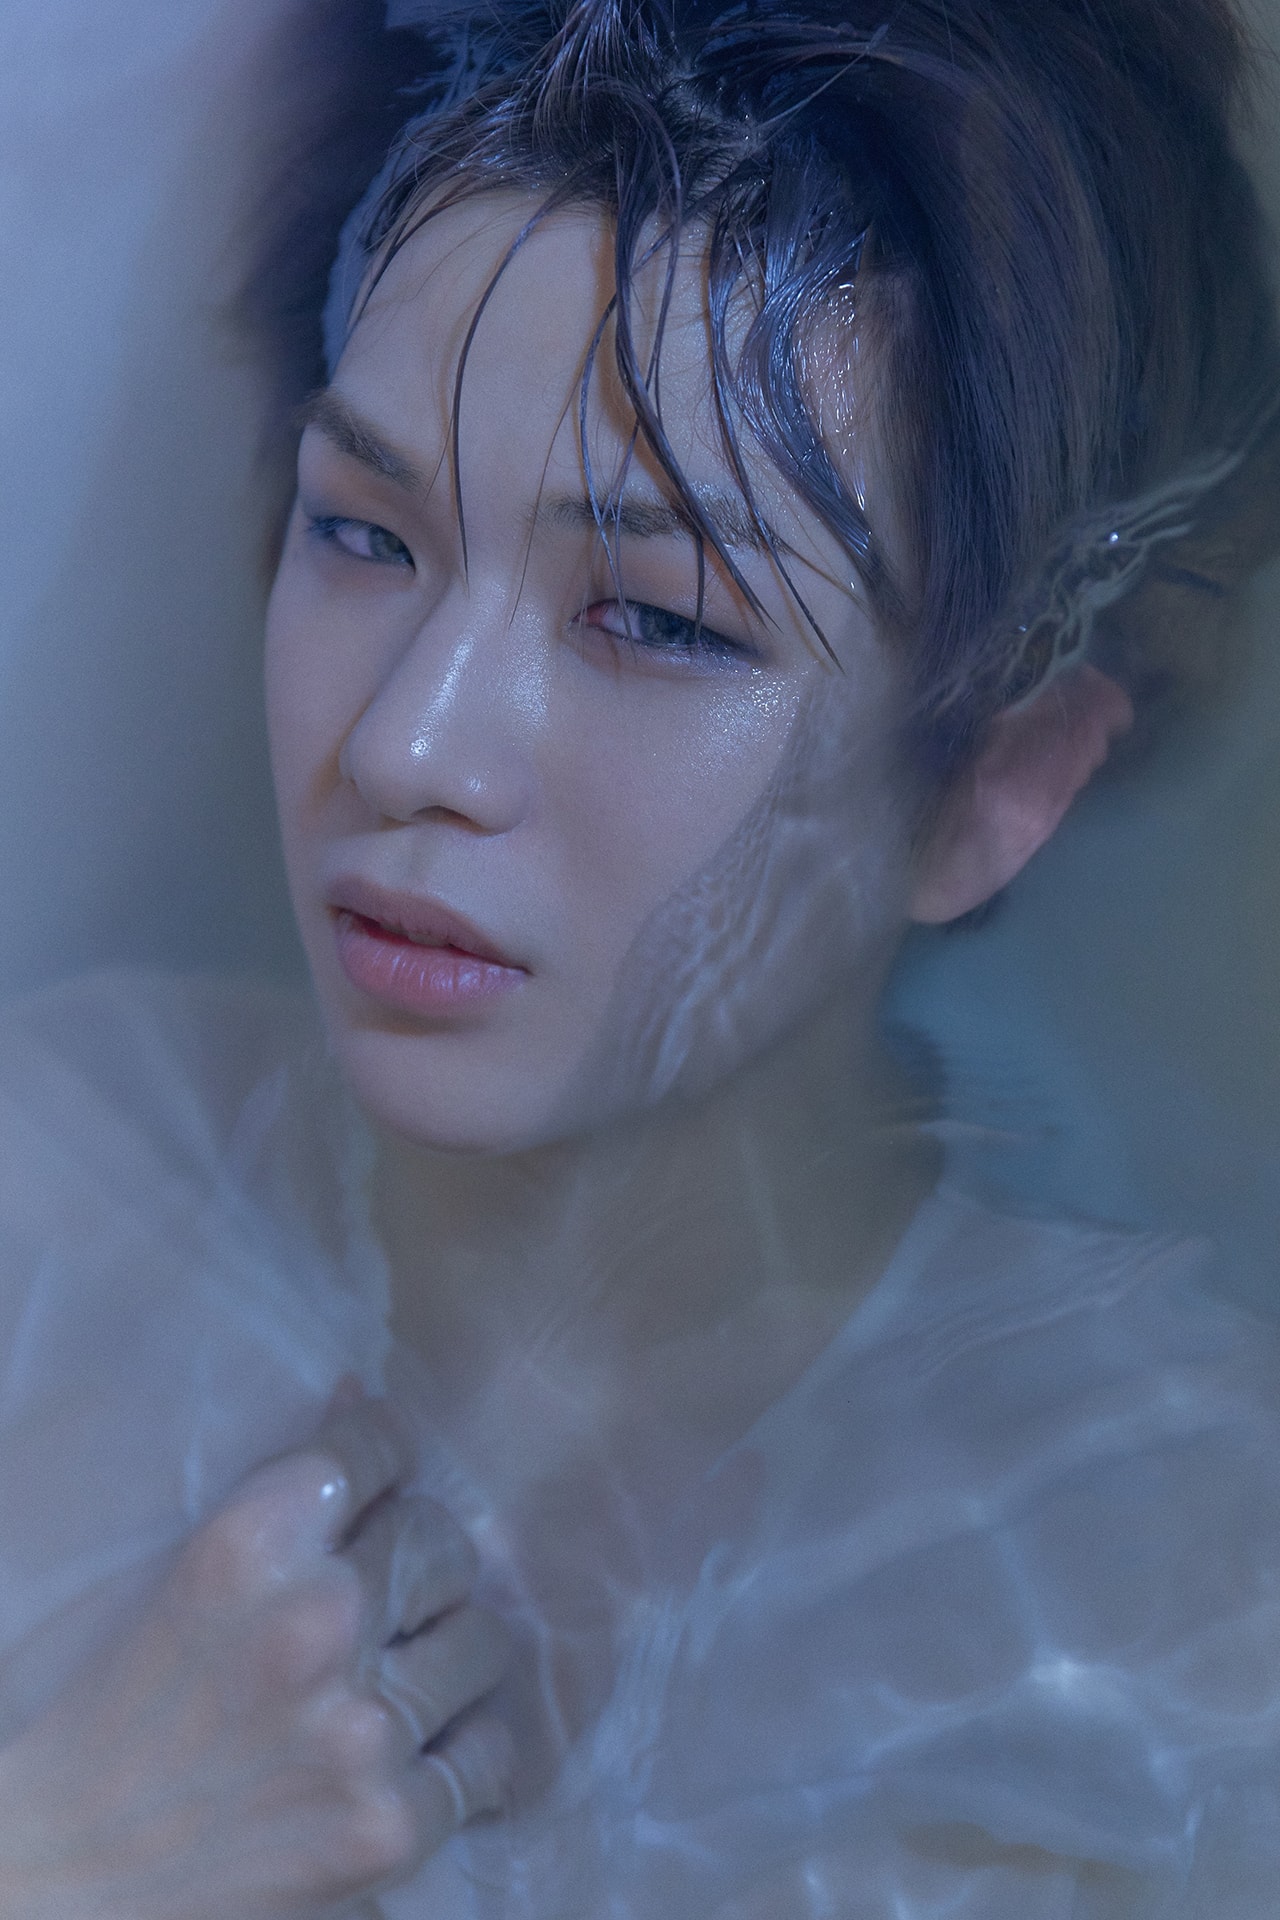 Kang Daniel Yellow Album K-Pop South Korean Singer Songwriter Music Solo Artist Konnect Entertainment Founder Wanna One Member Water Bath